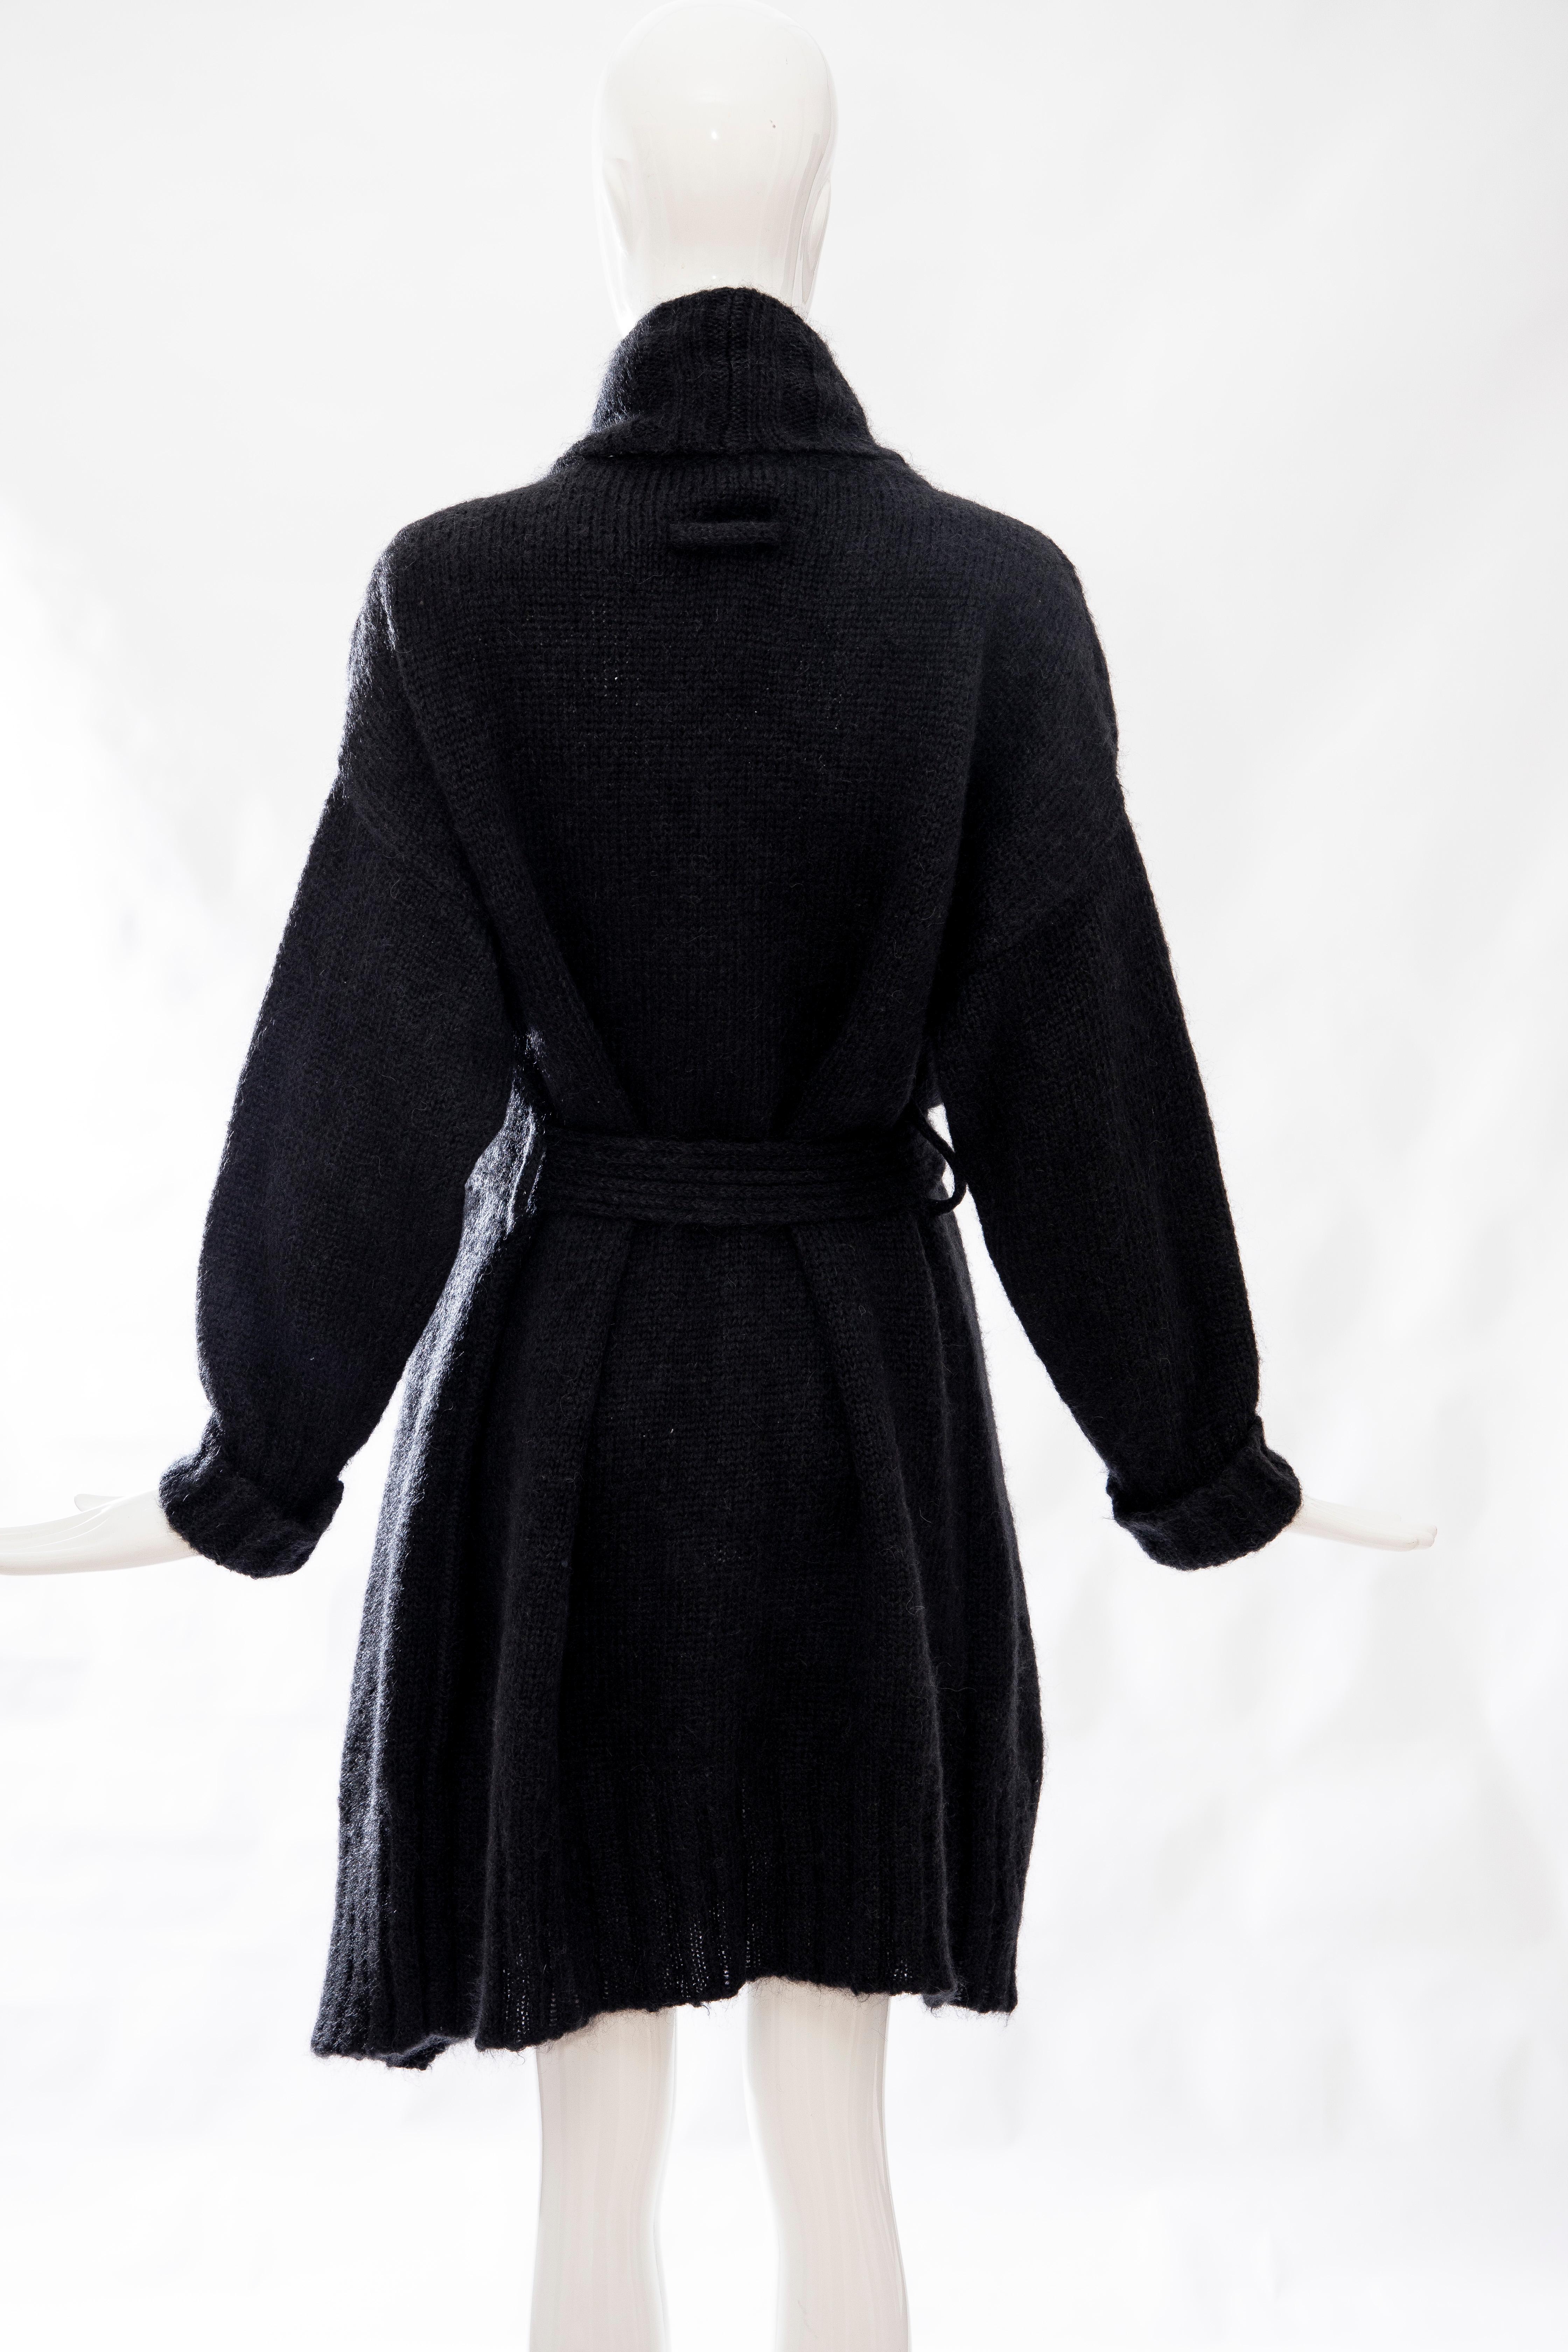 Jean Paul Gaultier Runway Mohair Knit Appliquéd Coins Sweater Dress , Fall 2010 For Sale 3